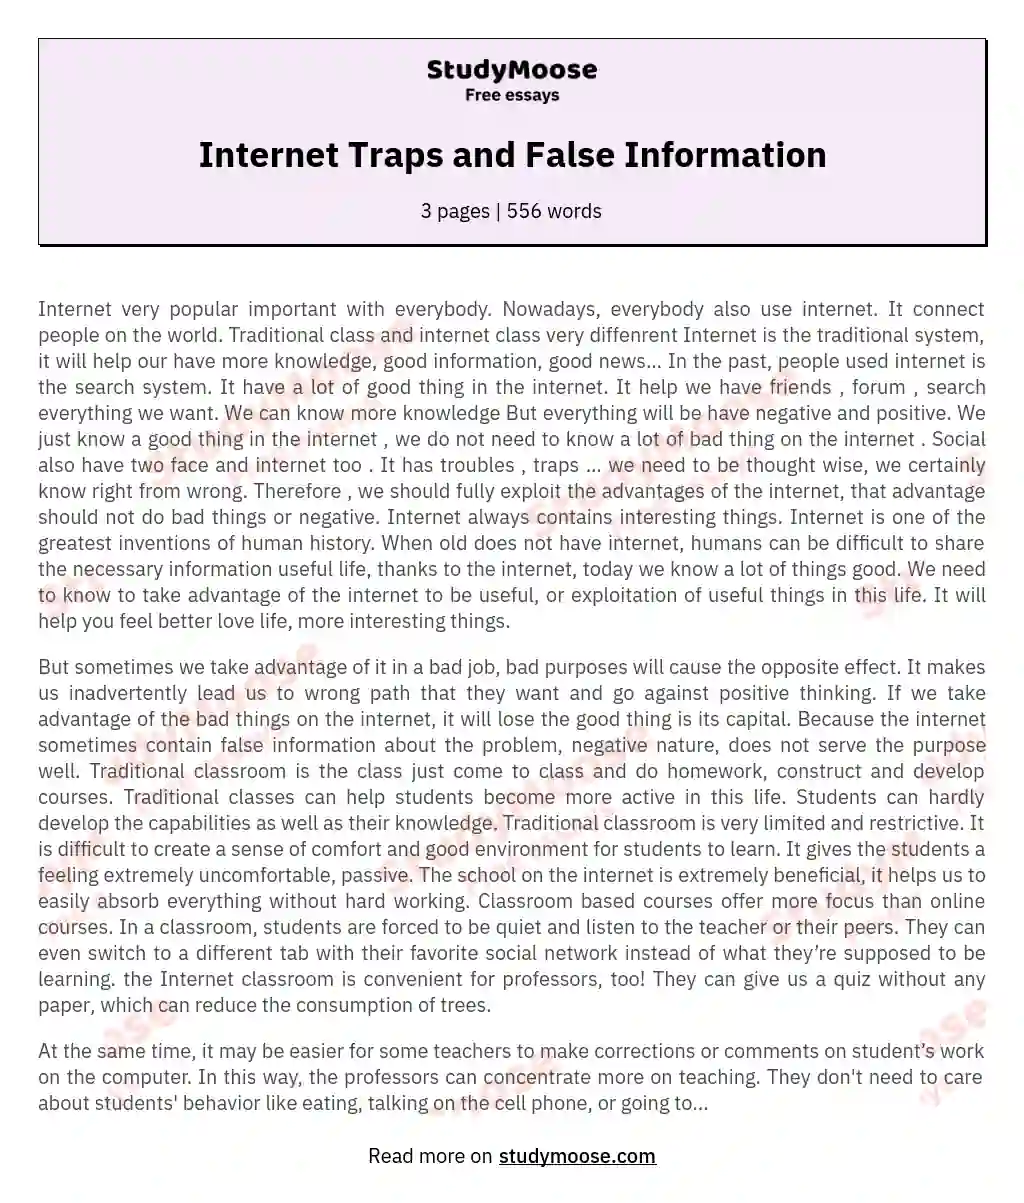 Internet Traps and False Information essay